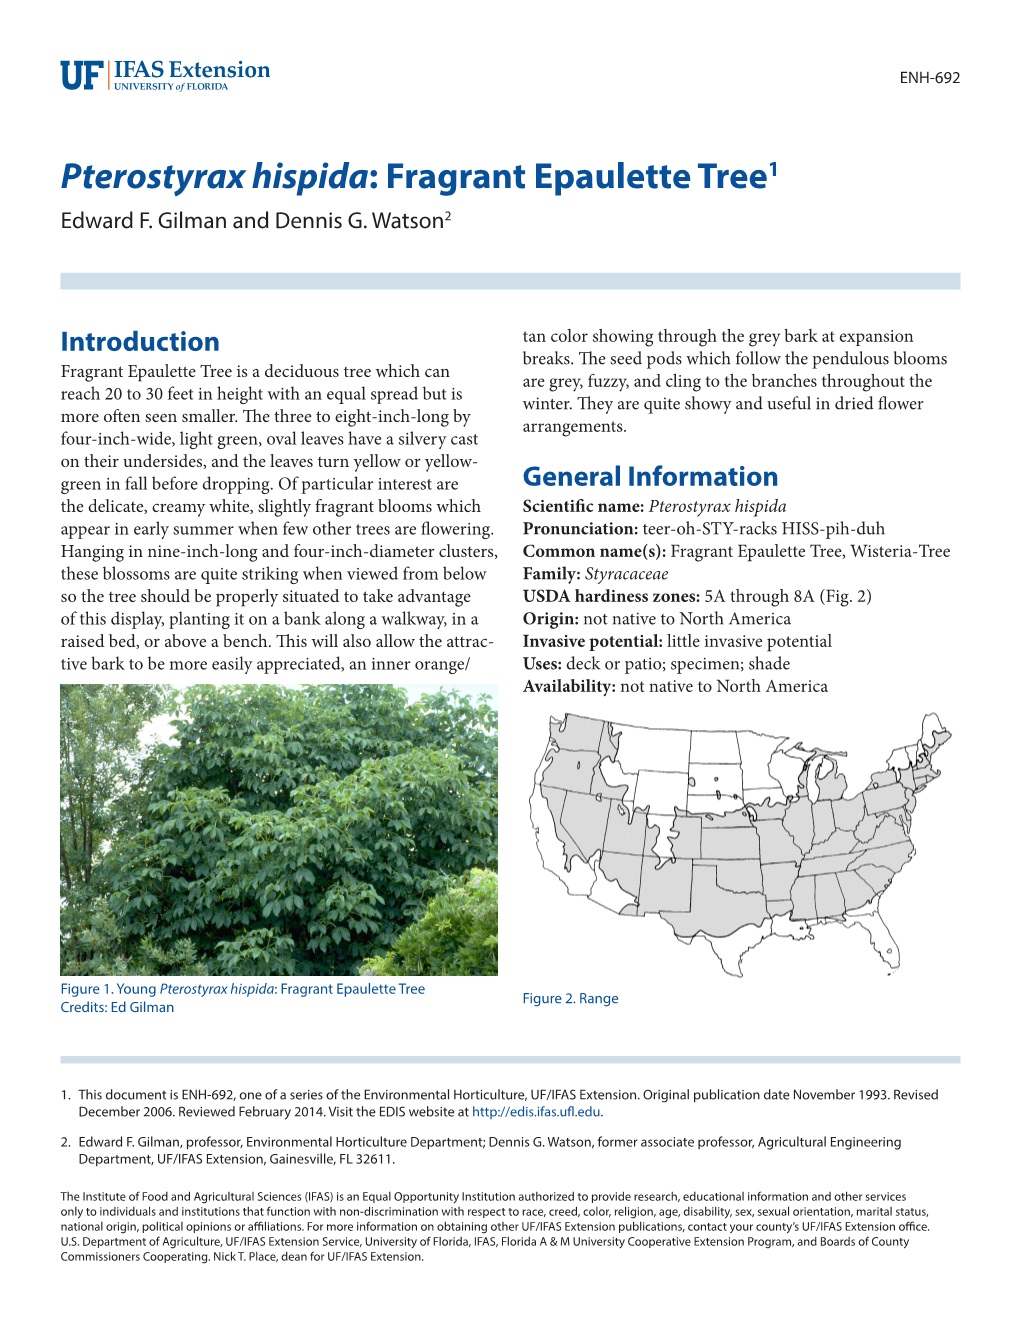 Pterostyrax Hispida: Fragrant Epaulette Tree1 Edward F